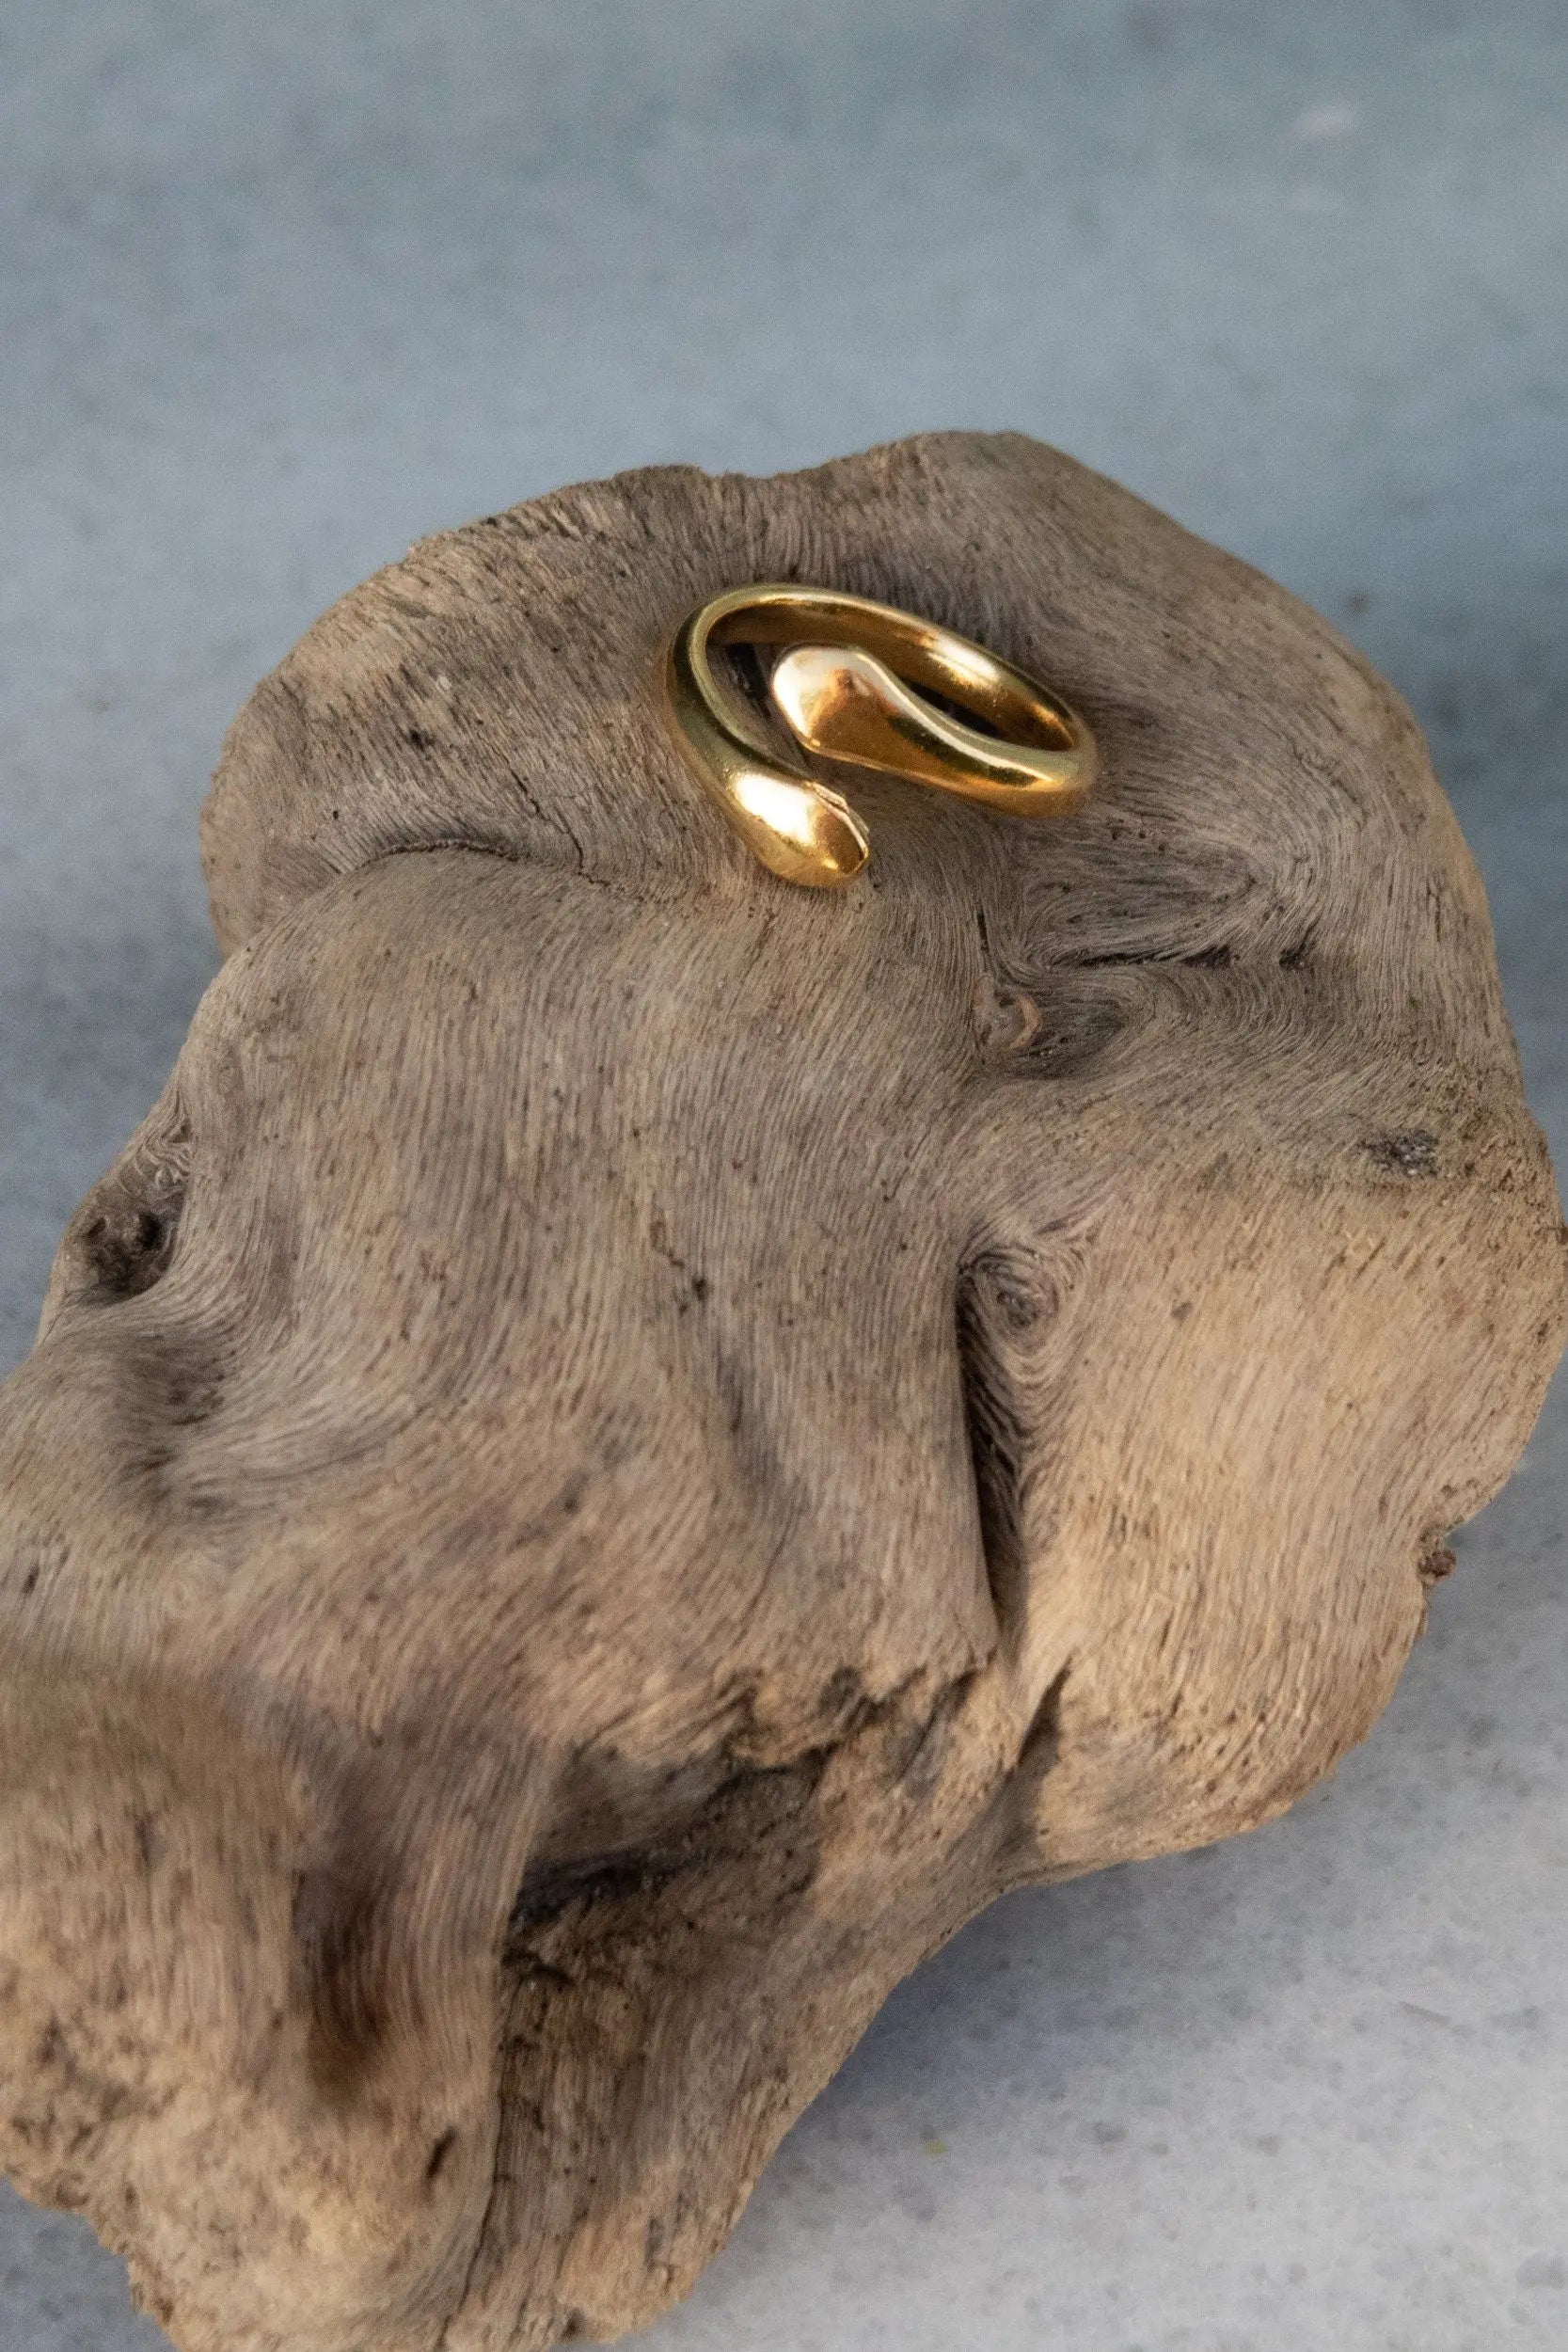 Snake Wrap RING,Adjustable Gold Greek ring for women, Minimal Serpent Ring, Ethnic Boho Ring, 24K Gold plated ring, Greek jewelry